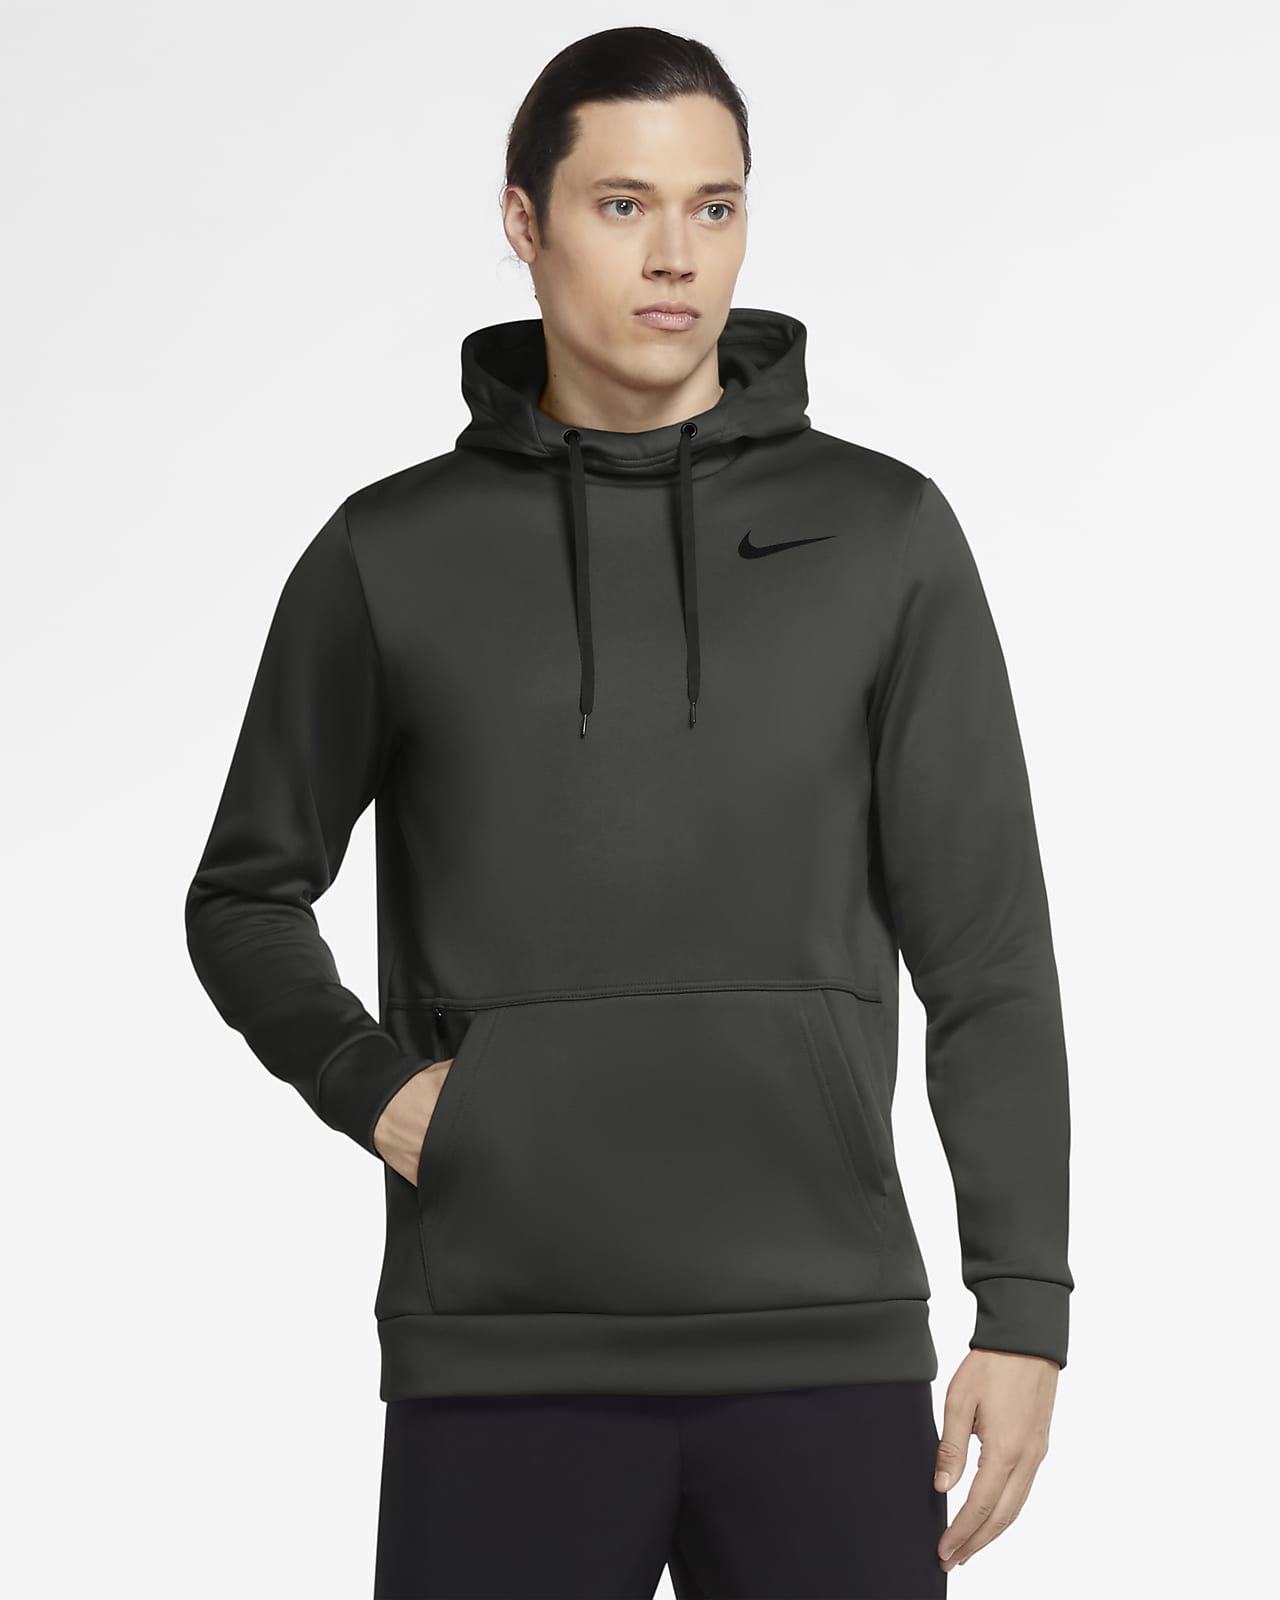 men's pullover training hoodie